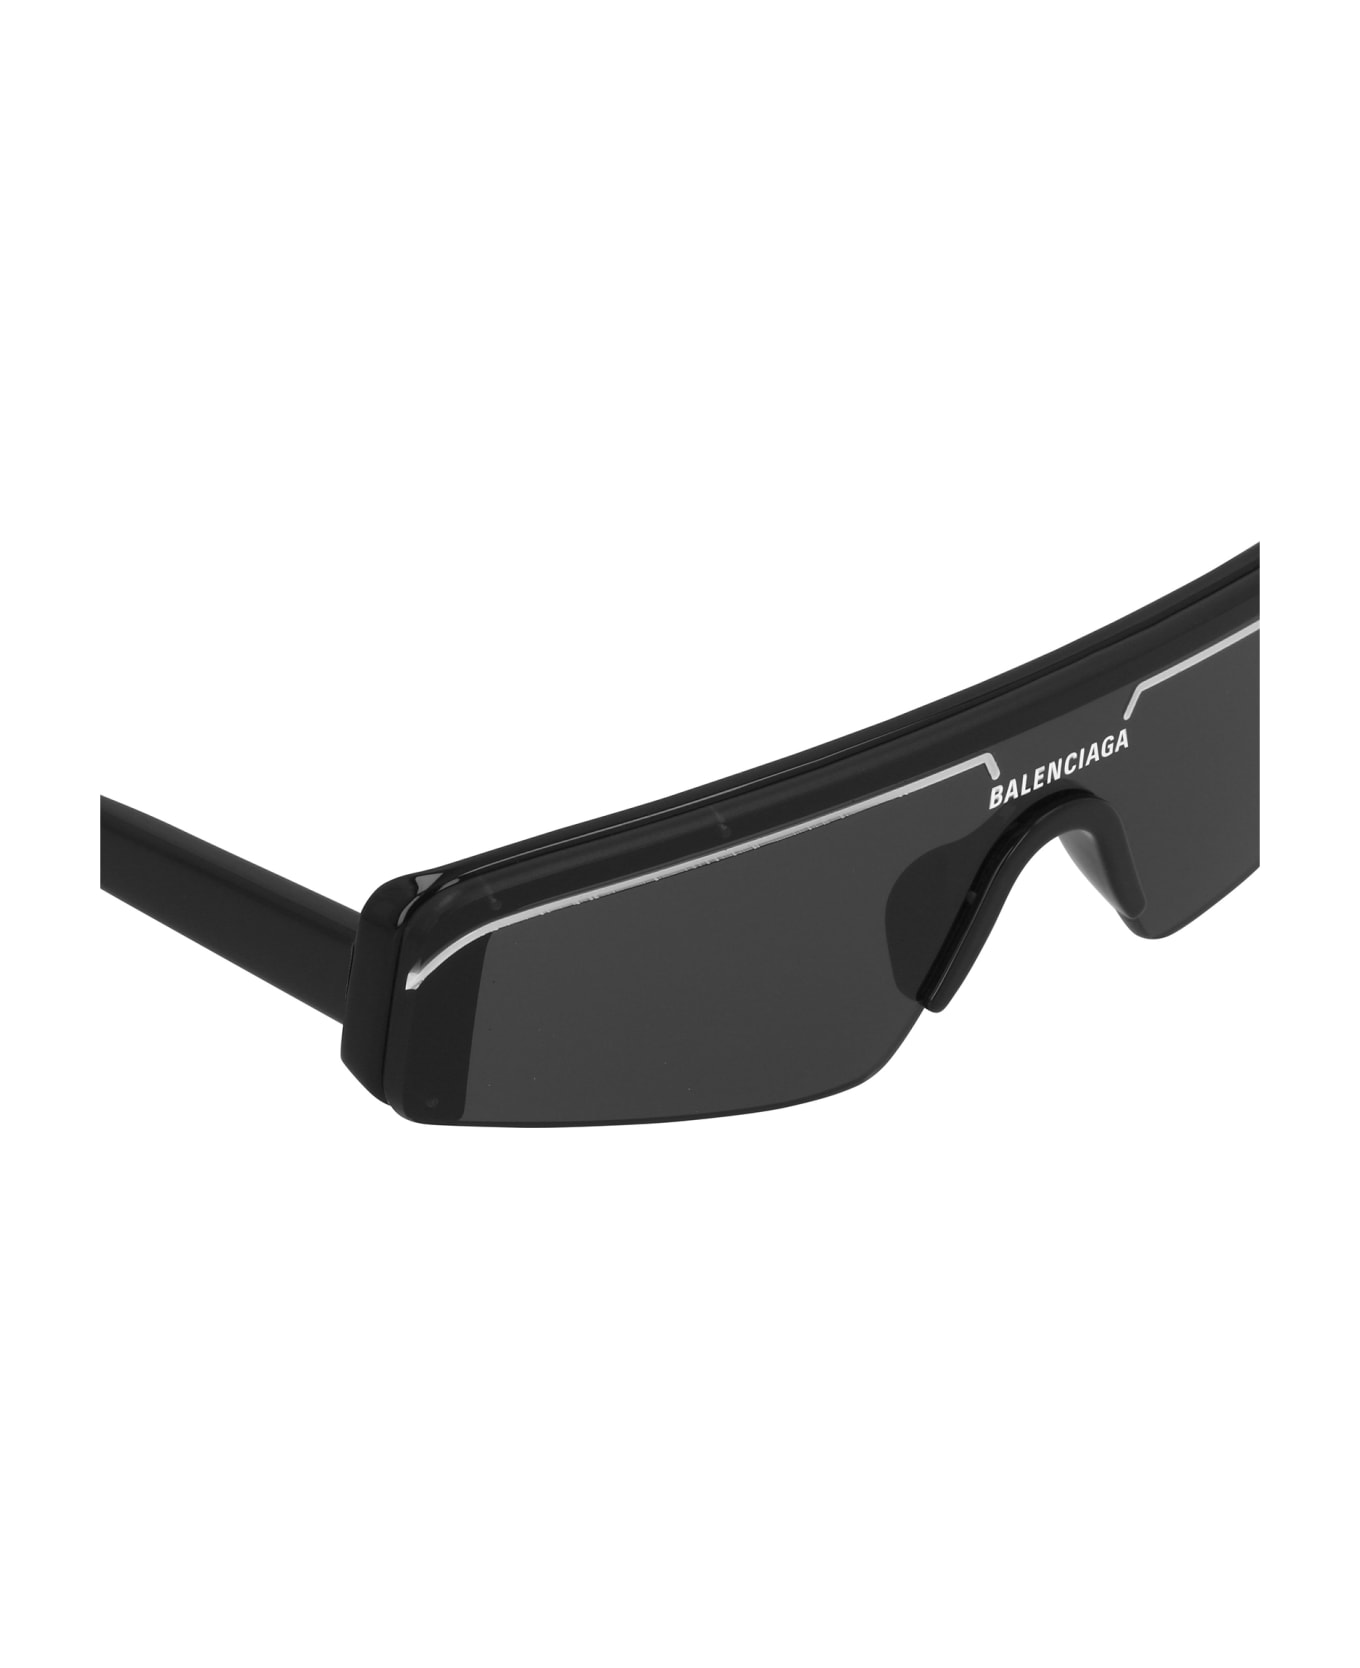 Balenciaga Eyewear Bb0003s Sunglasses - Black サングラス